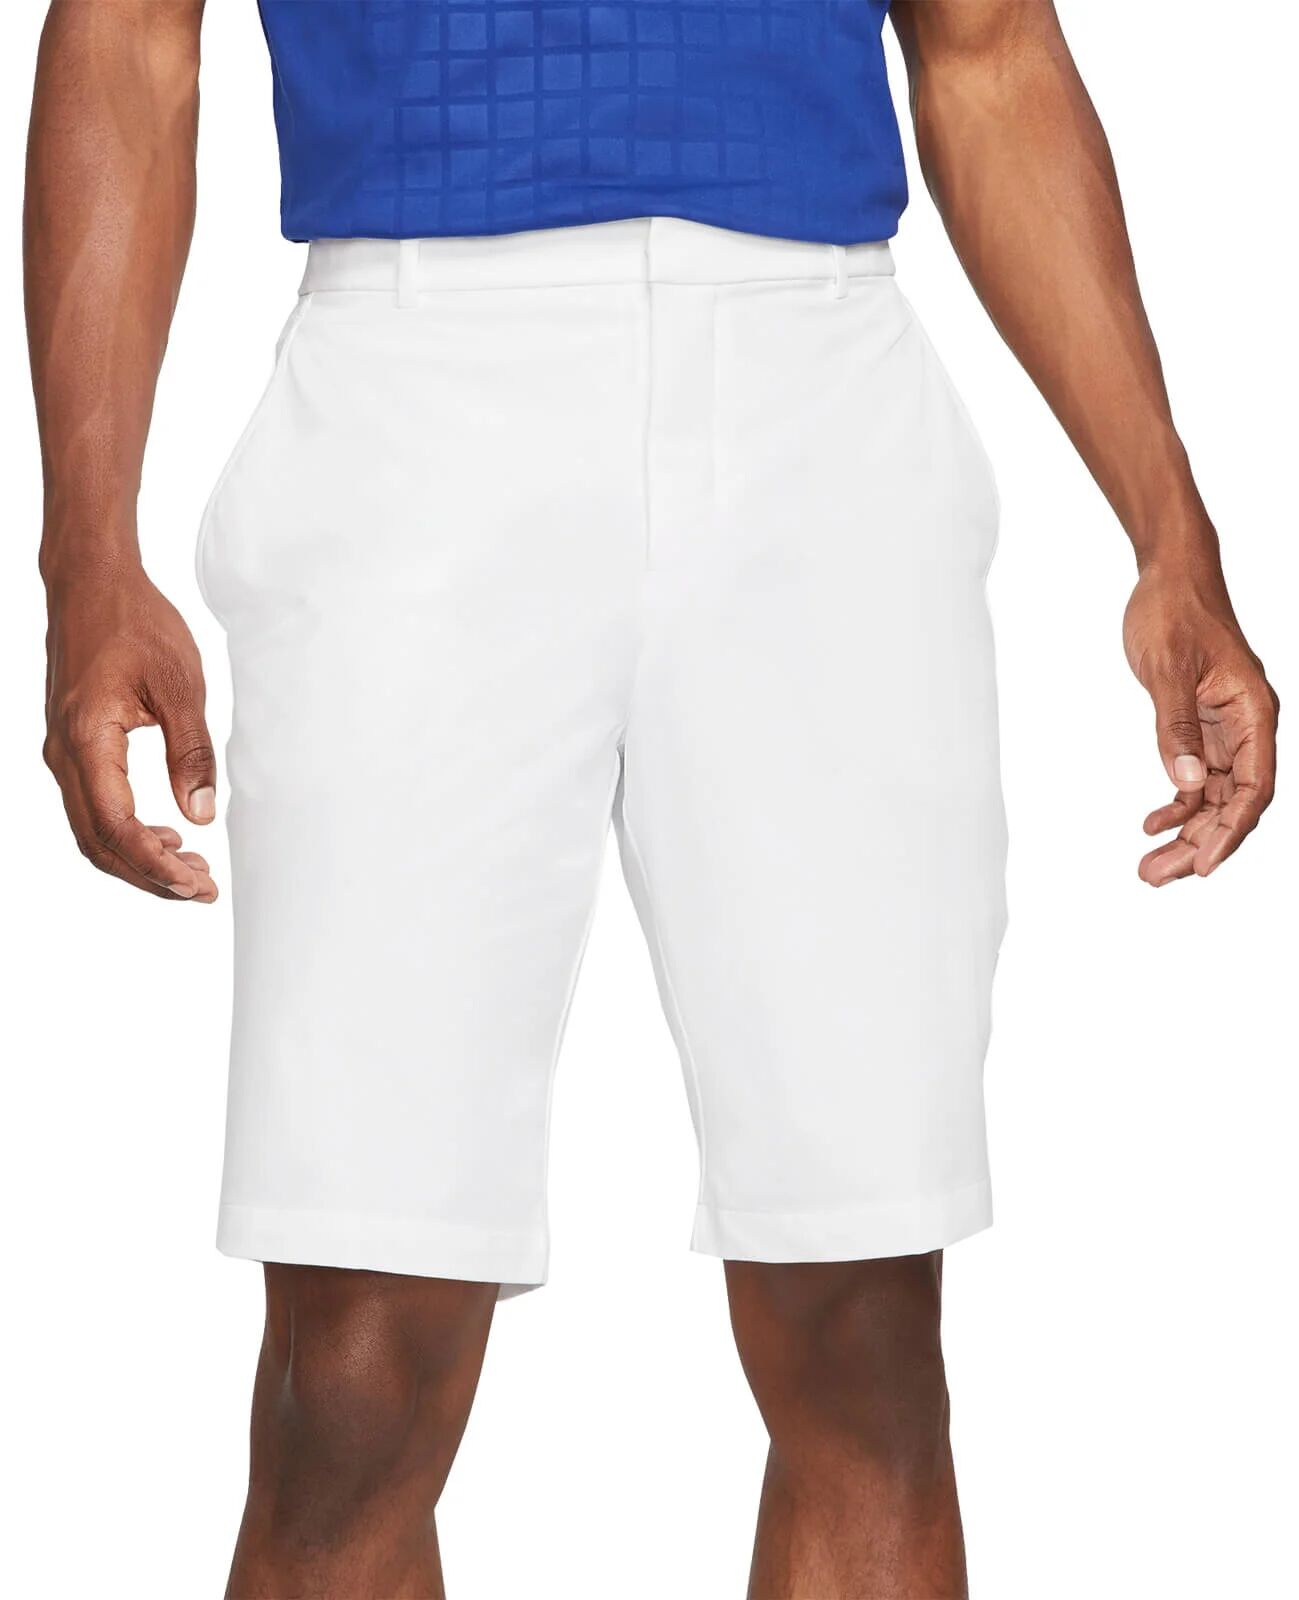 Nike Dri-FIT Men's Golf Shorts - White, Size: 33